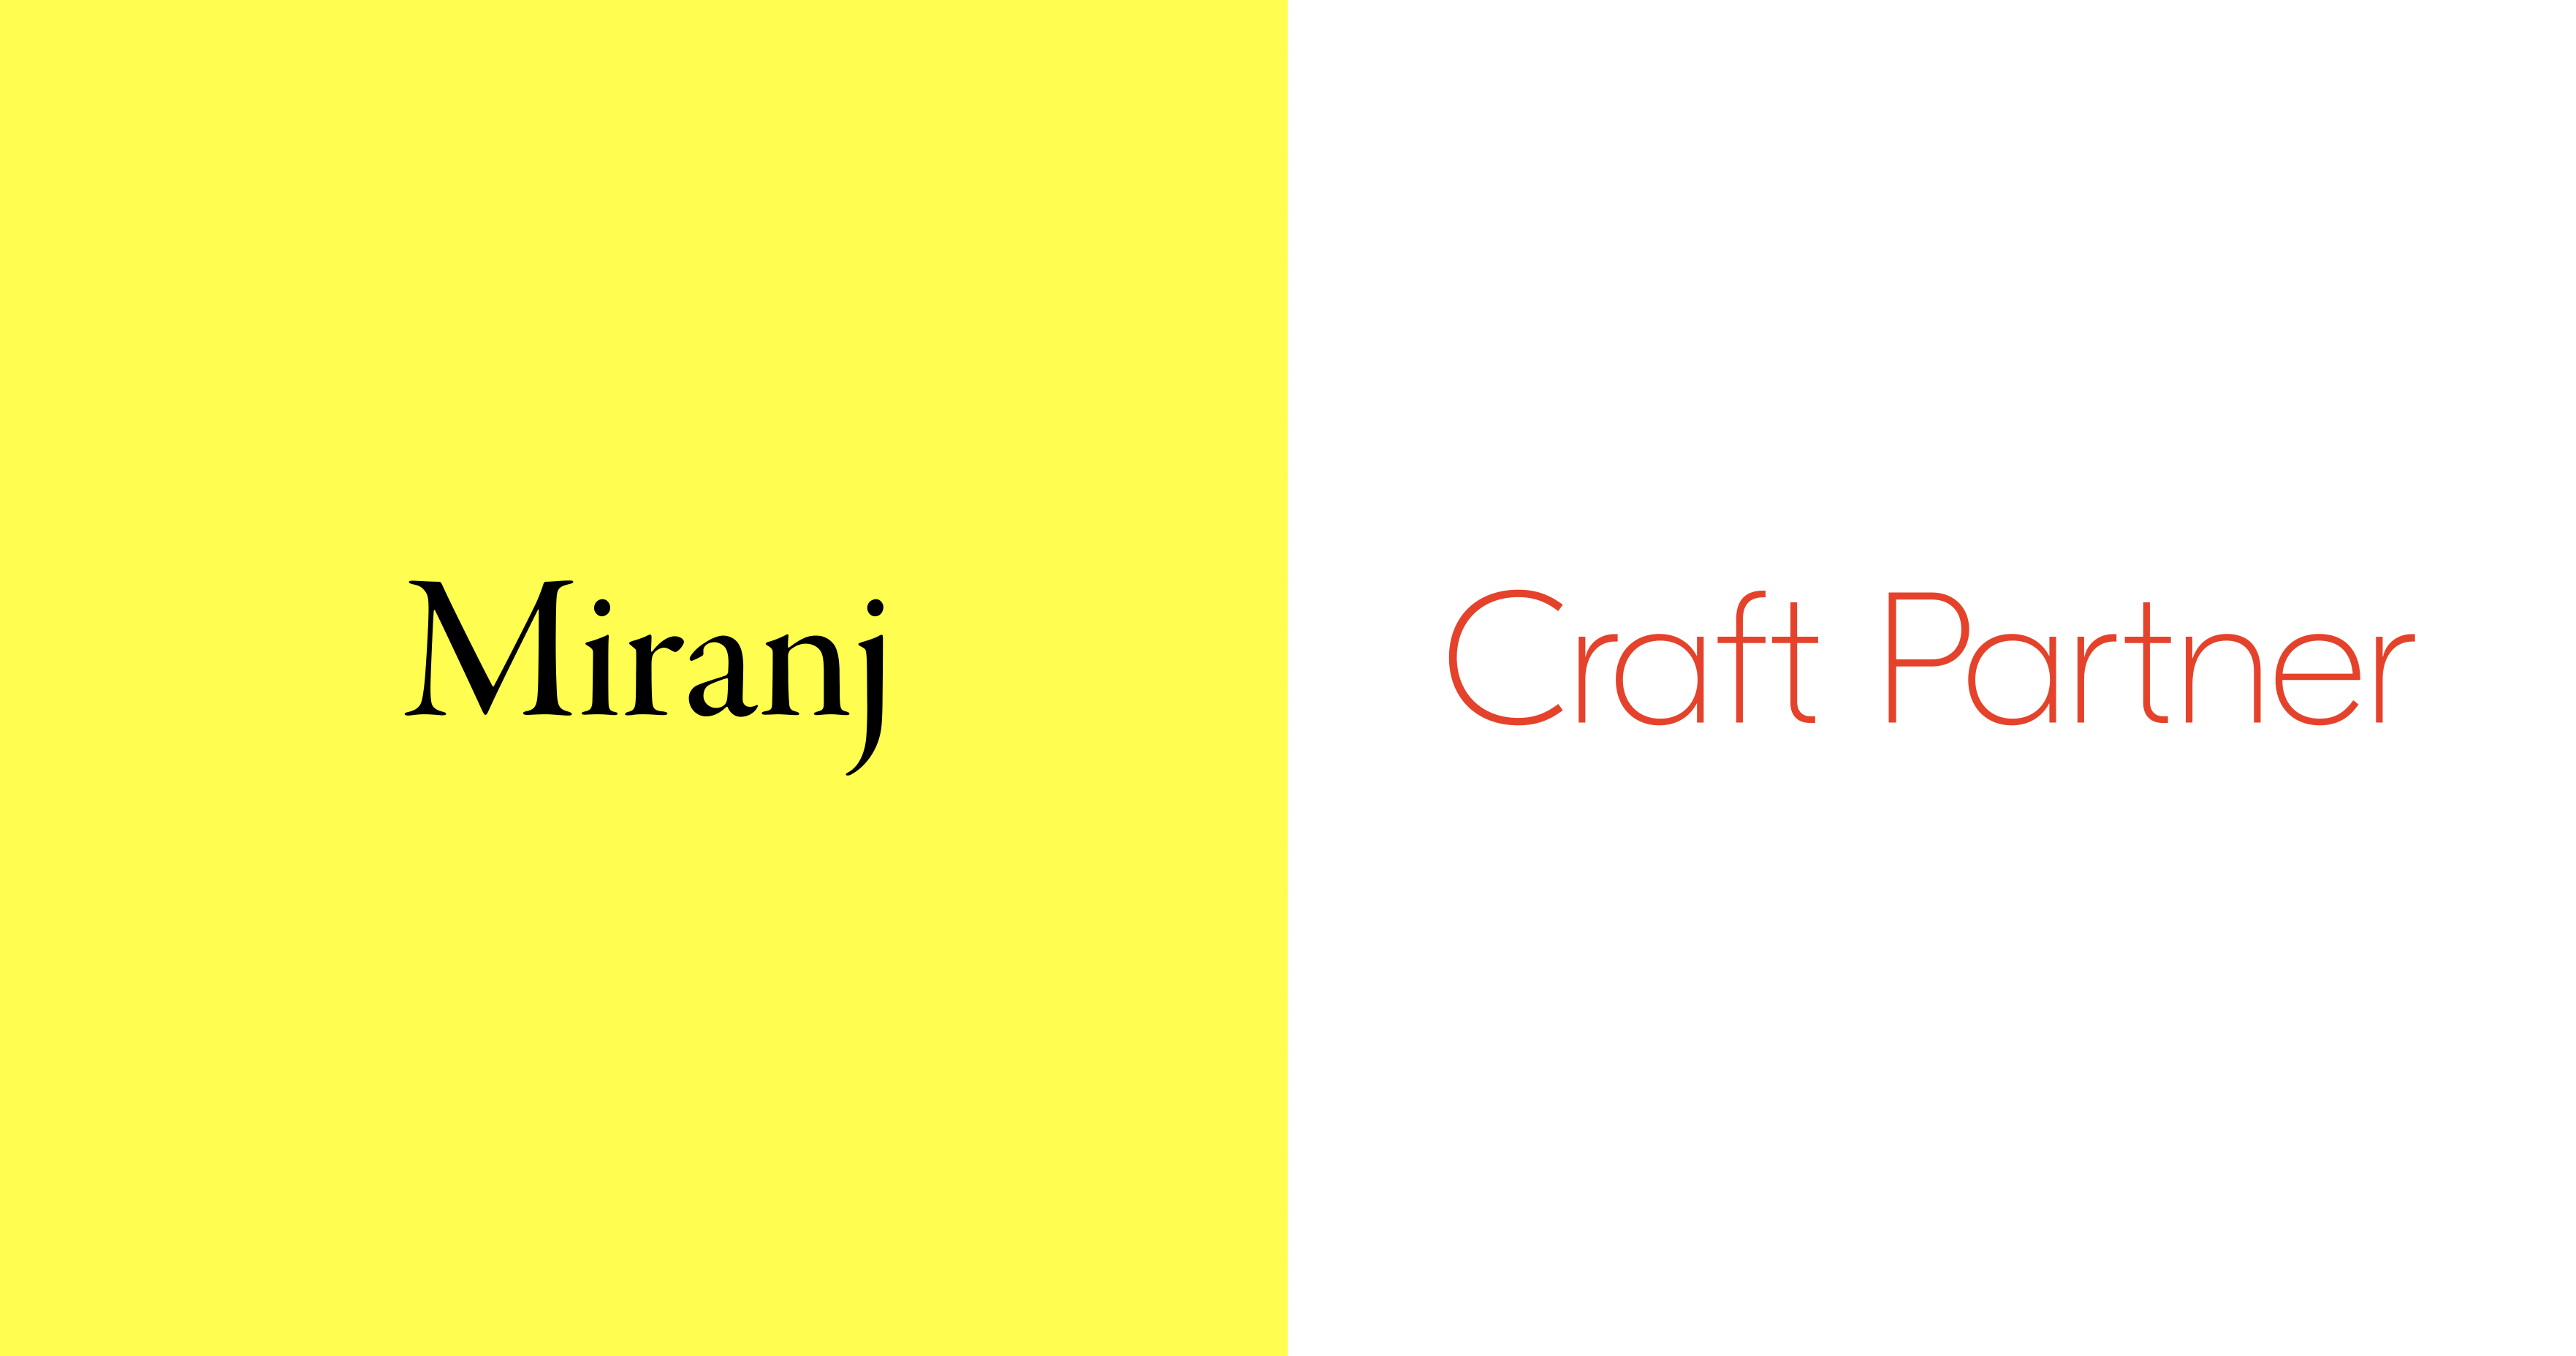 Miranj is a Craft Partner